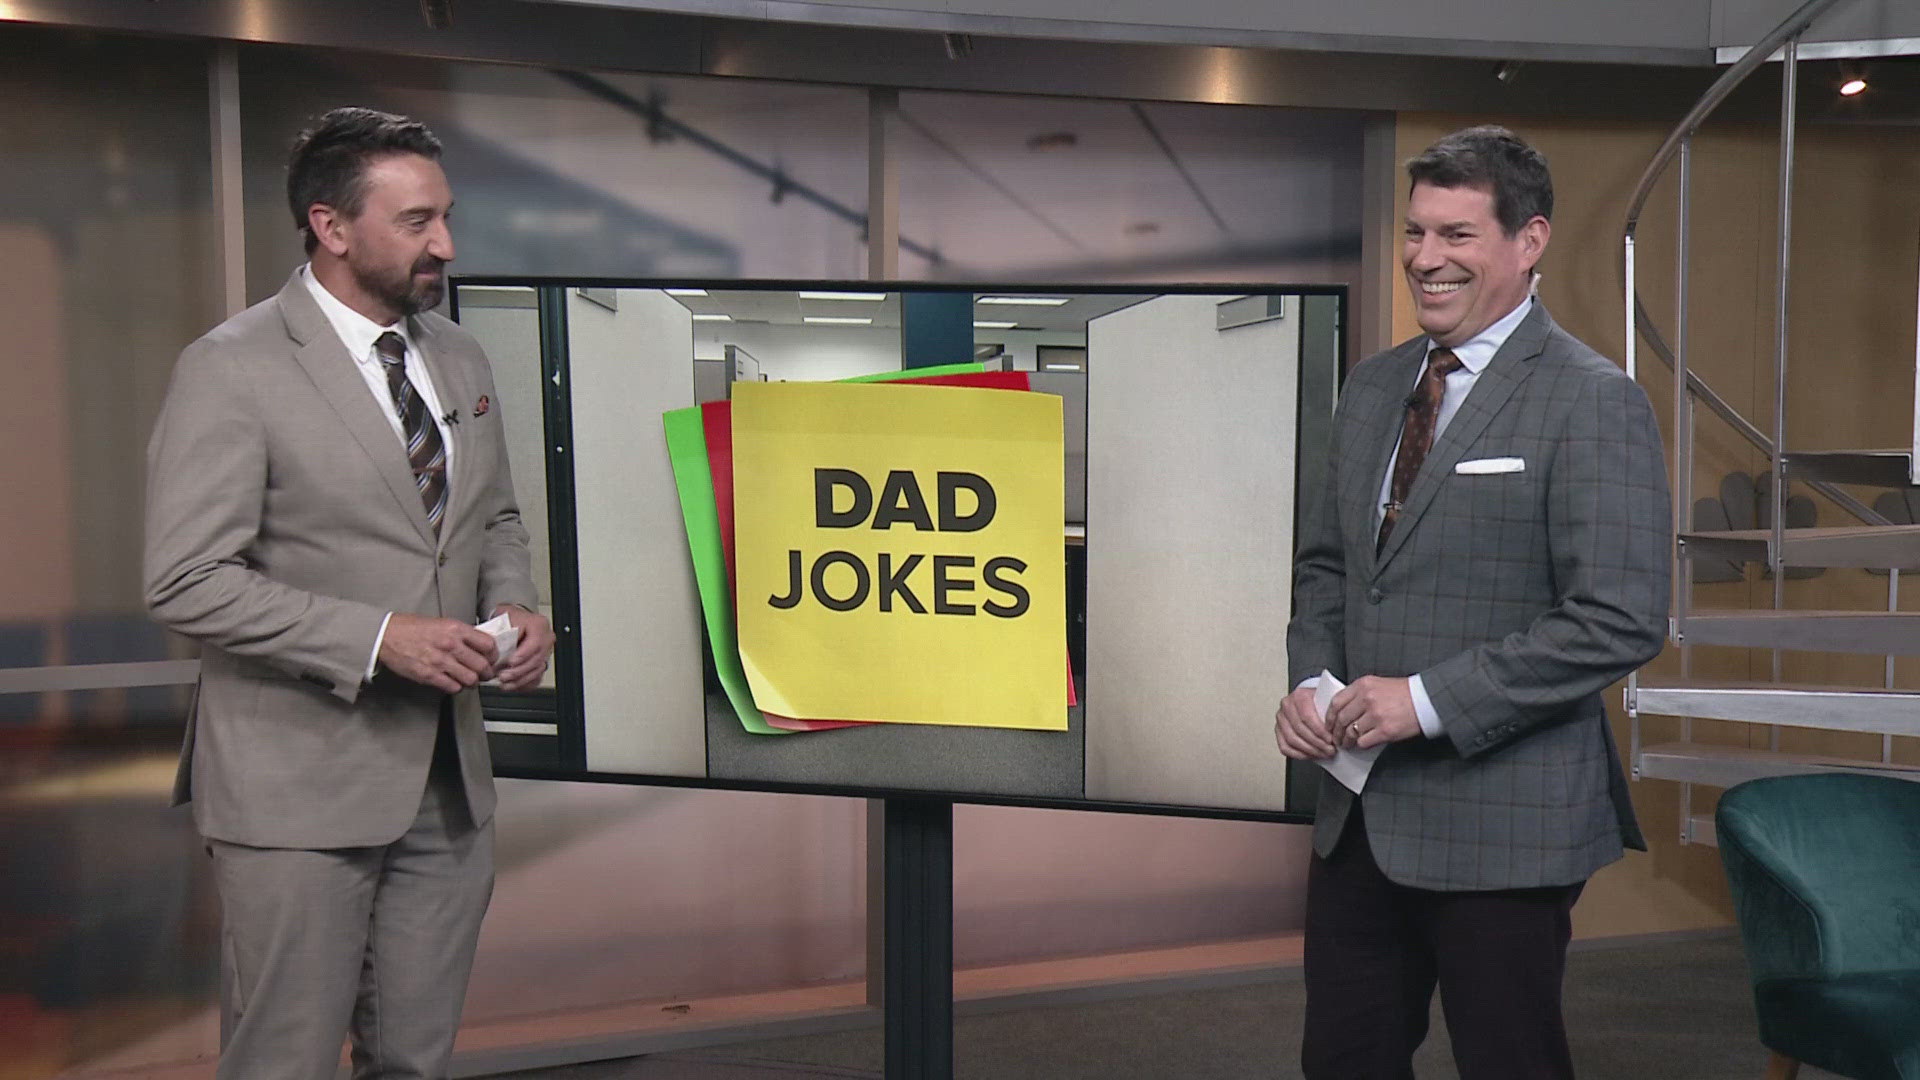 3News' Matt Wintz and Dave Chudowsky have more dad jokes. Enjoy!